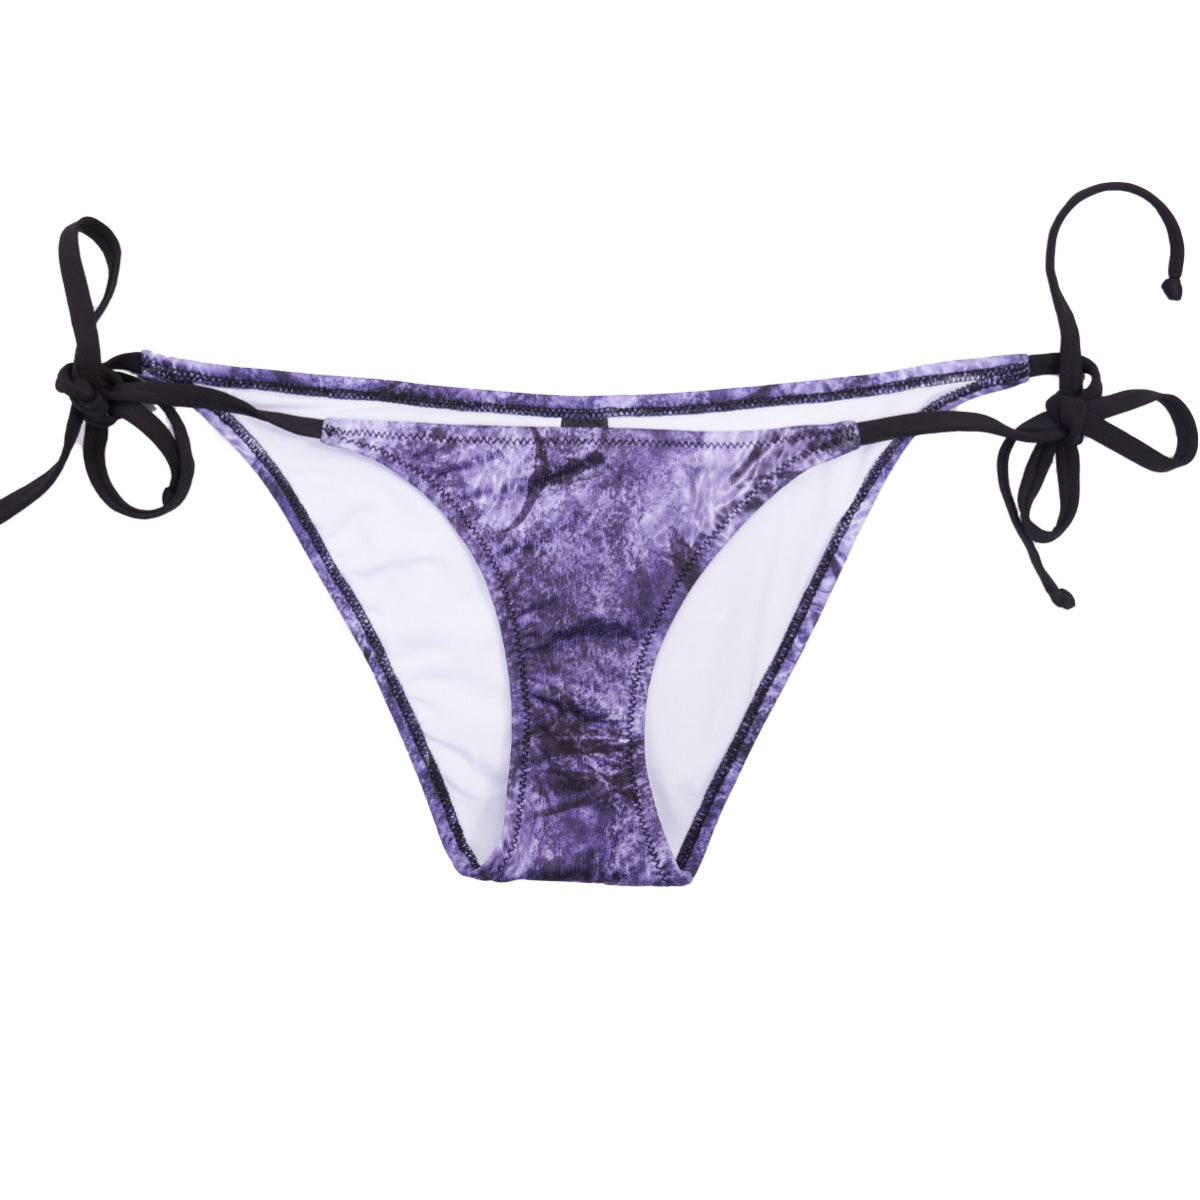 Bimini - Bikini Bottom - Marlin Mania -purple - Stafu Pro Series